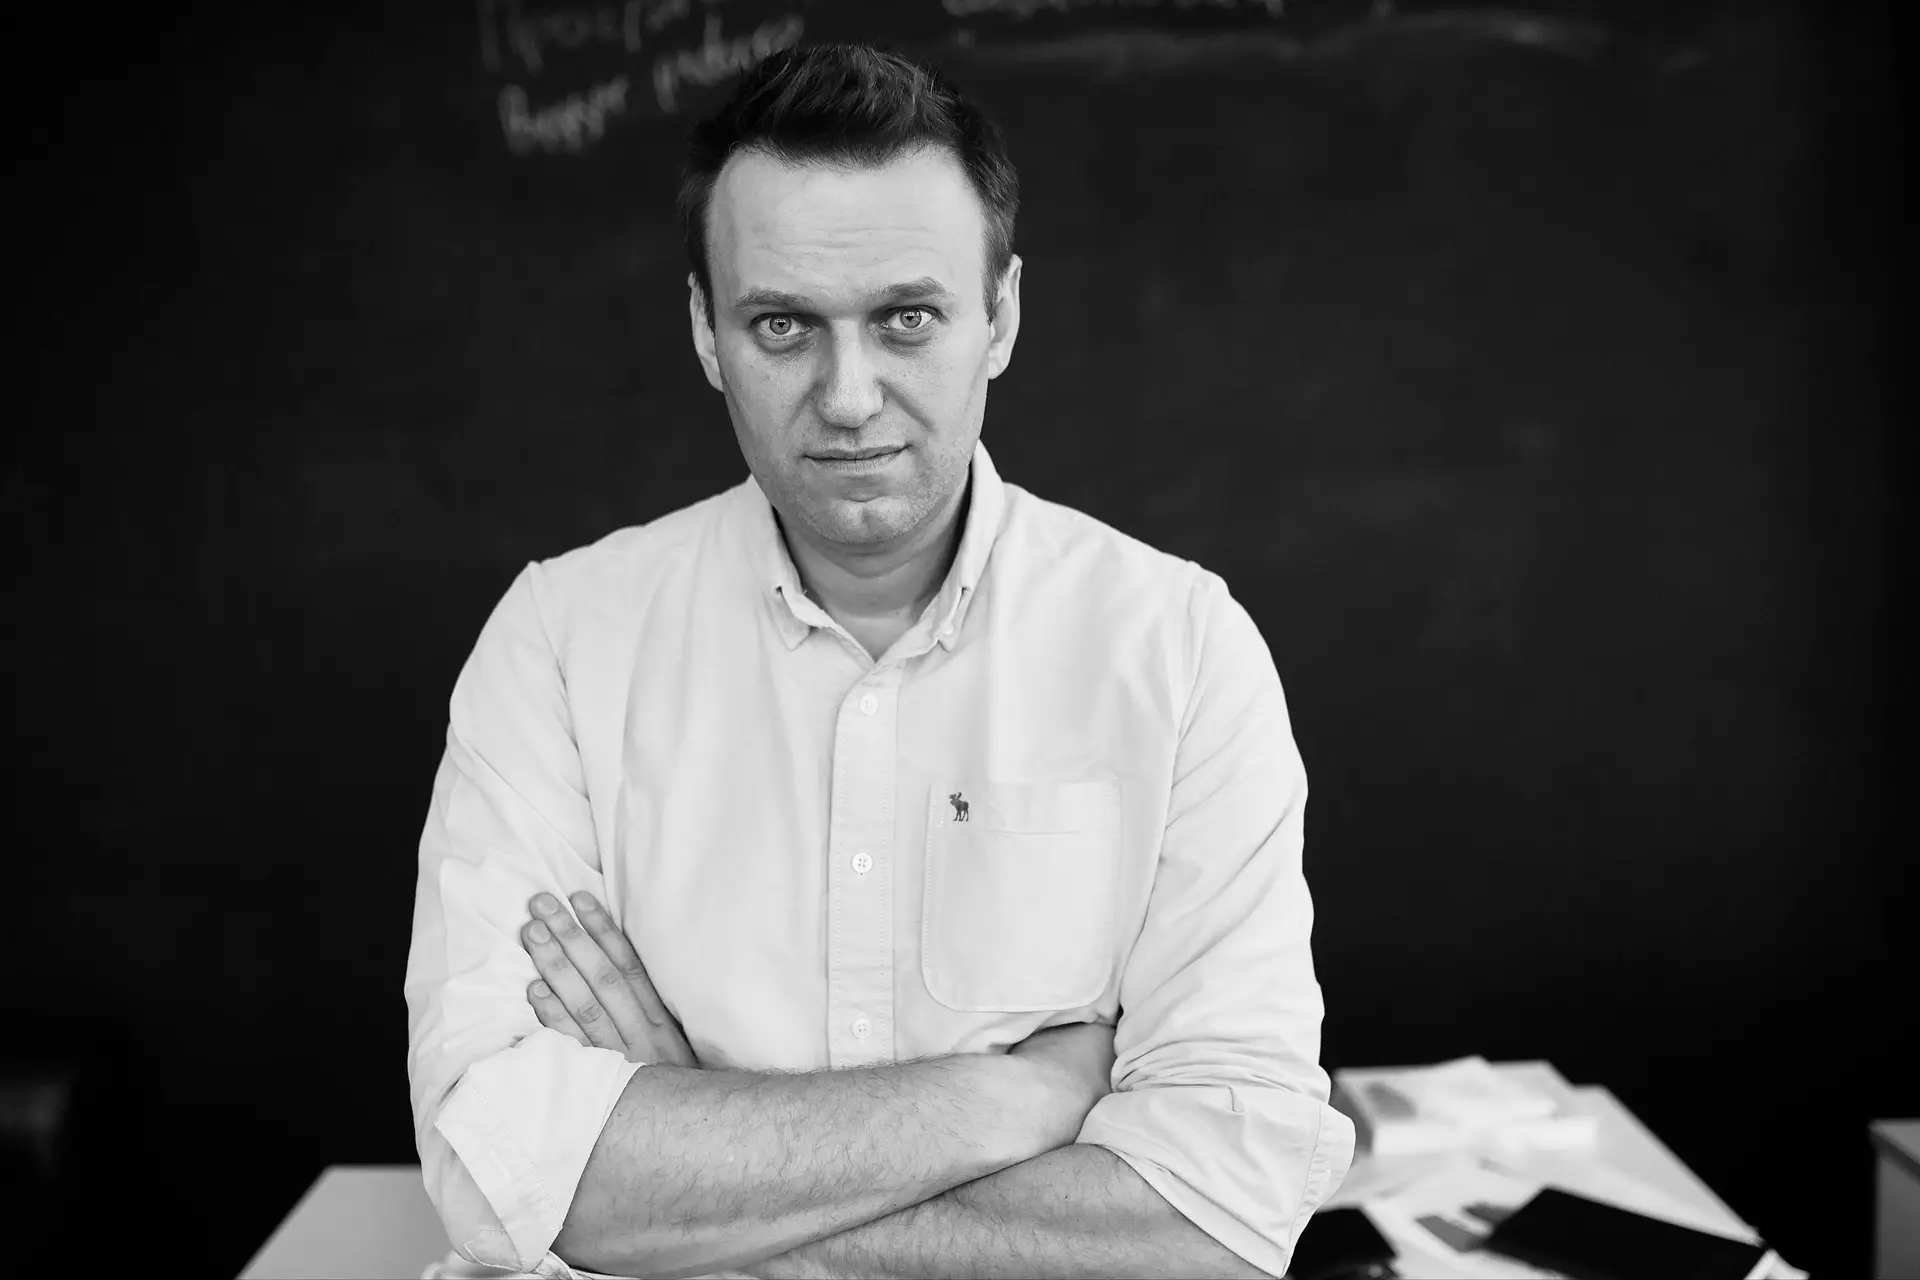 Opositor russo Alexei Navalny